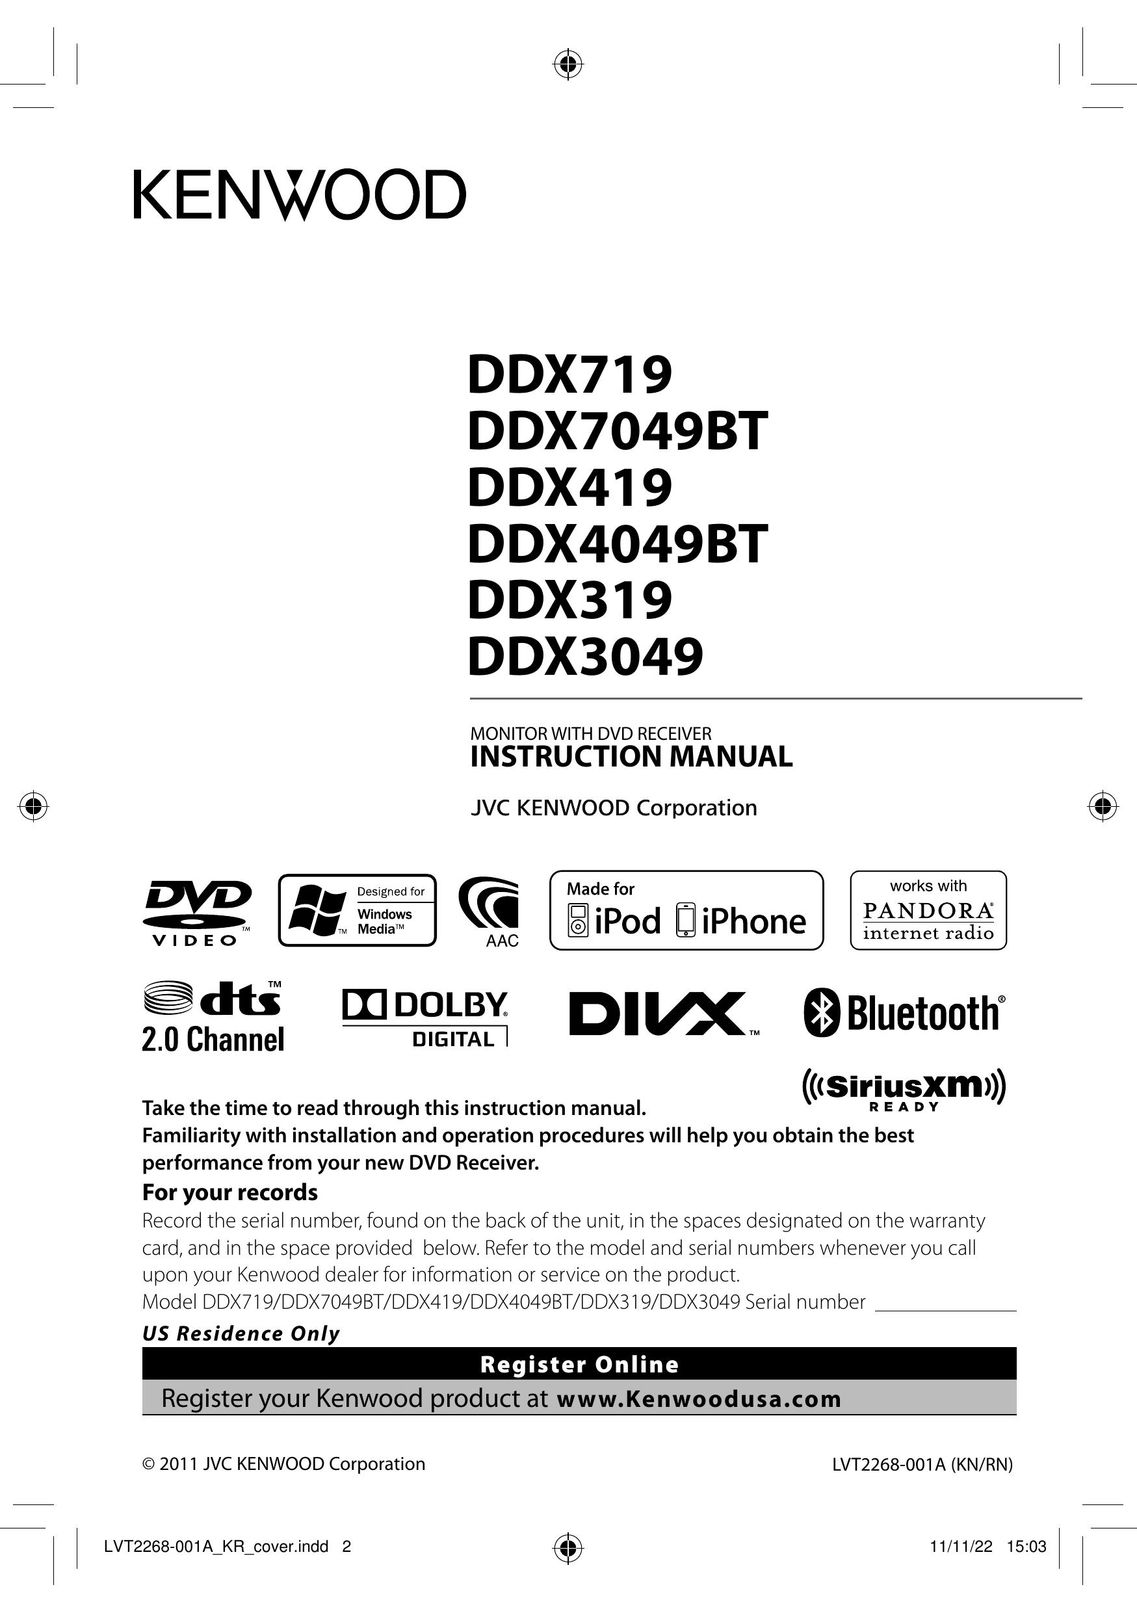 Kenwood DDX419 Car Video System User Manual